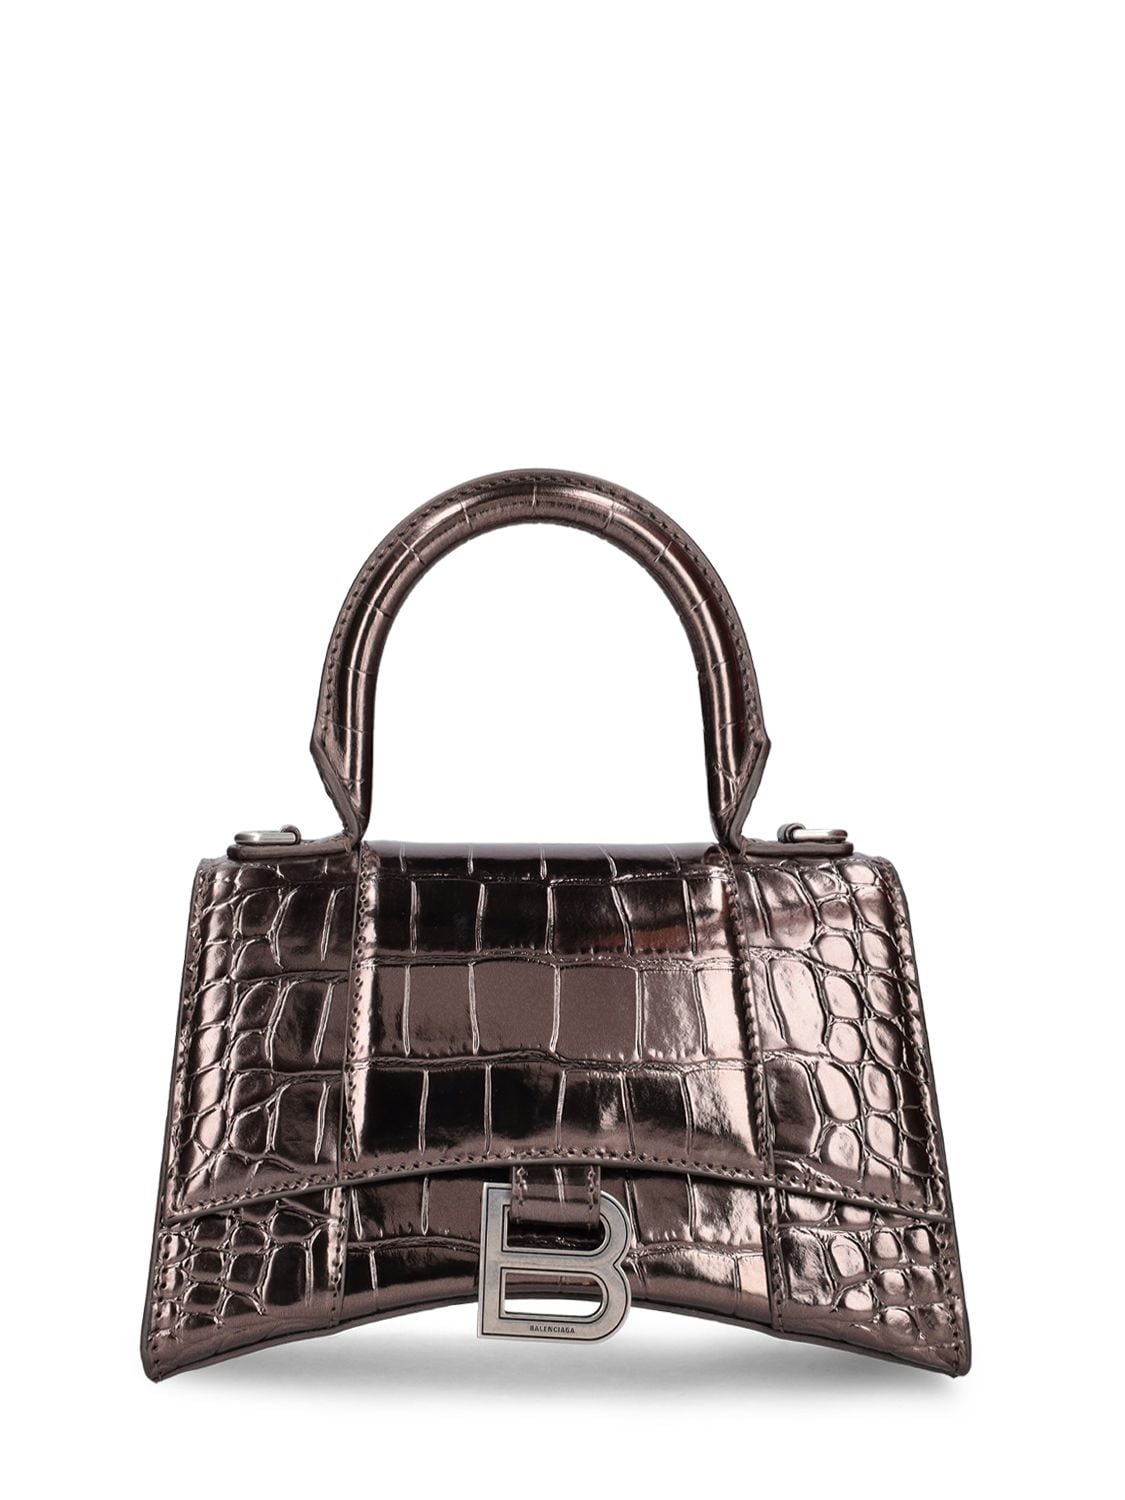 Image of Xs Hourglass Leather Top Handle Bag